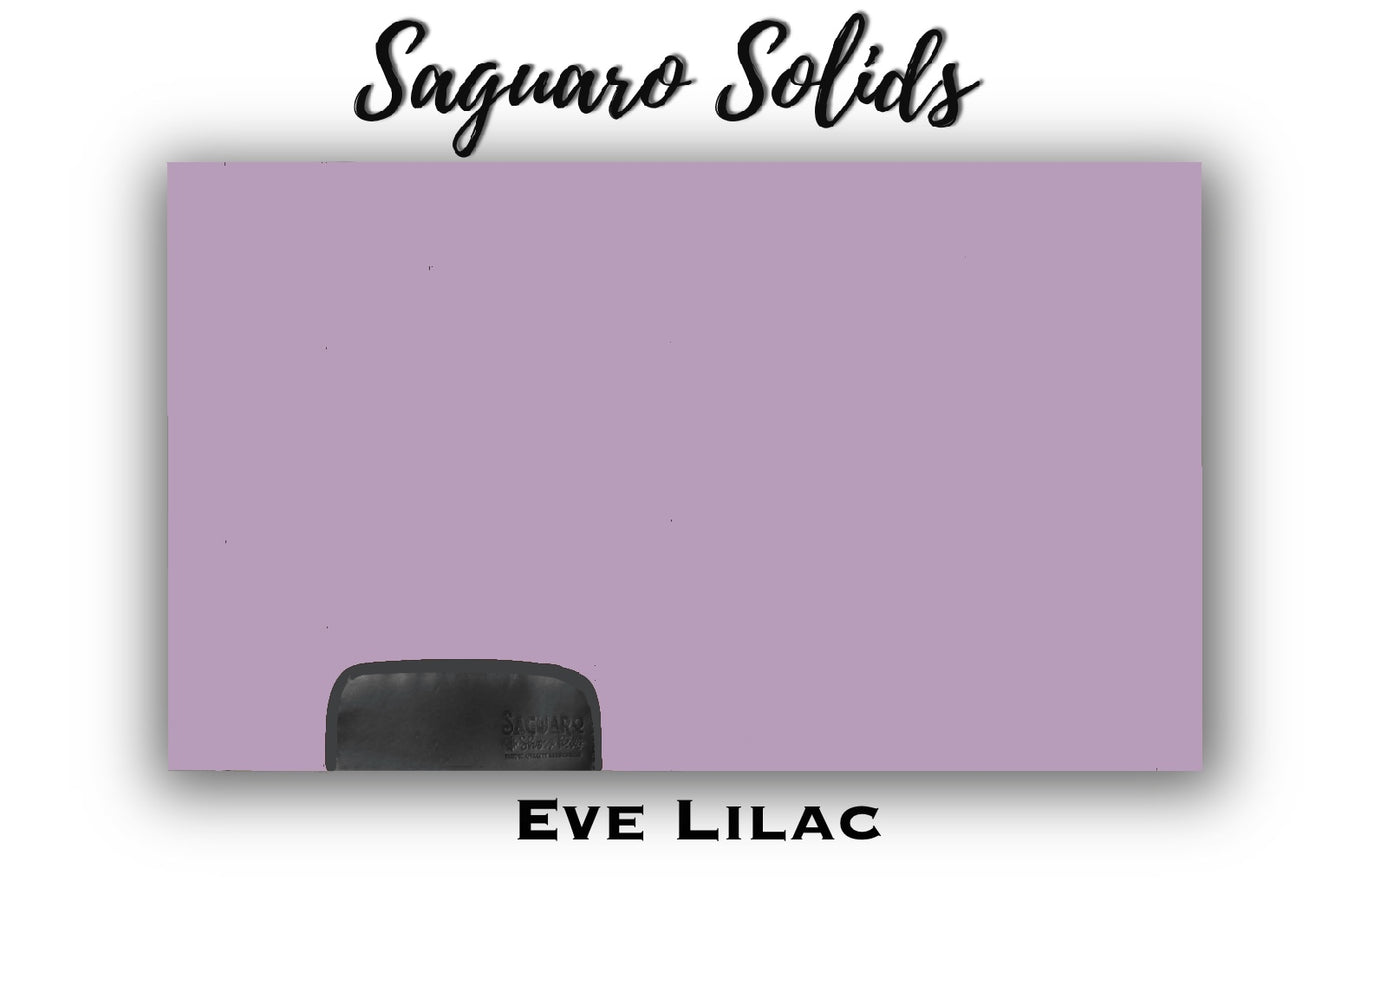 Saguaro Solid "Eve Lilac" Show Pad (SEMI-CUSTOM)